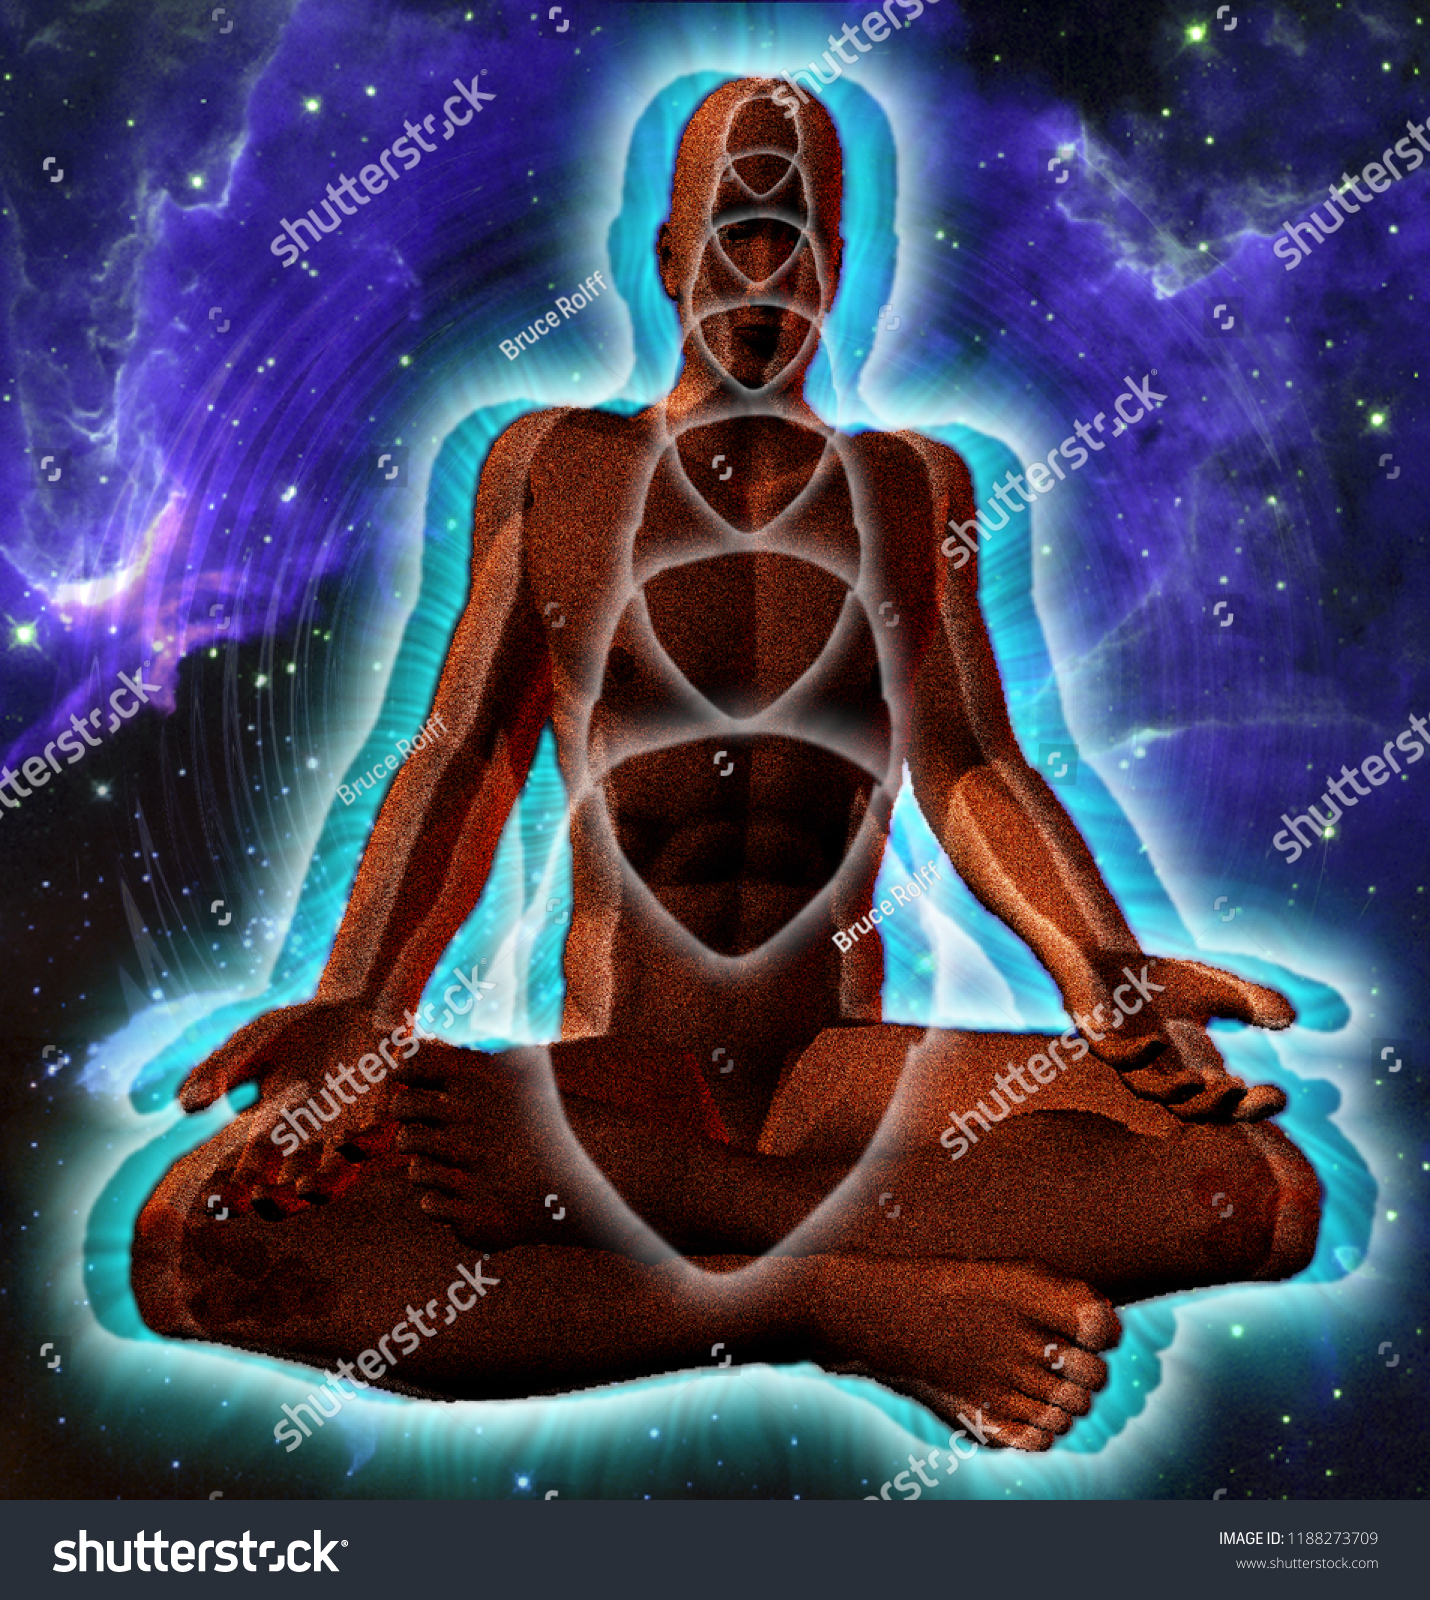 Man Meditate Lotus Pose Space Background Stock Illustration 1188273709